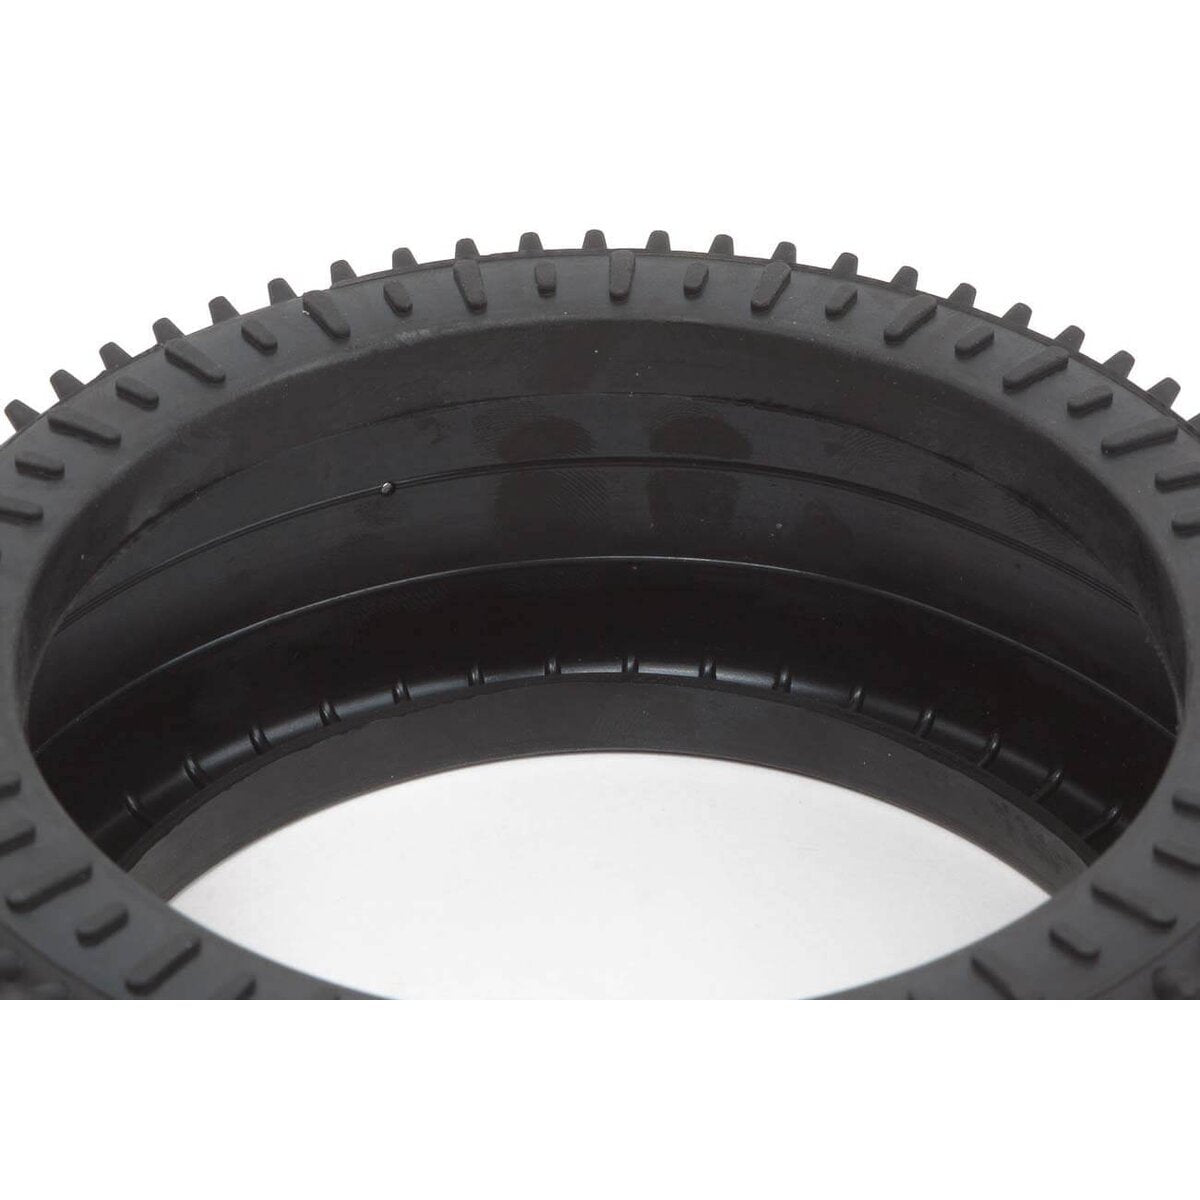 100222X - Tyre 180 Mm Astro-grip Wm + Wheel Black